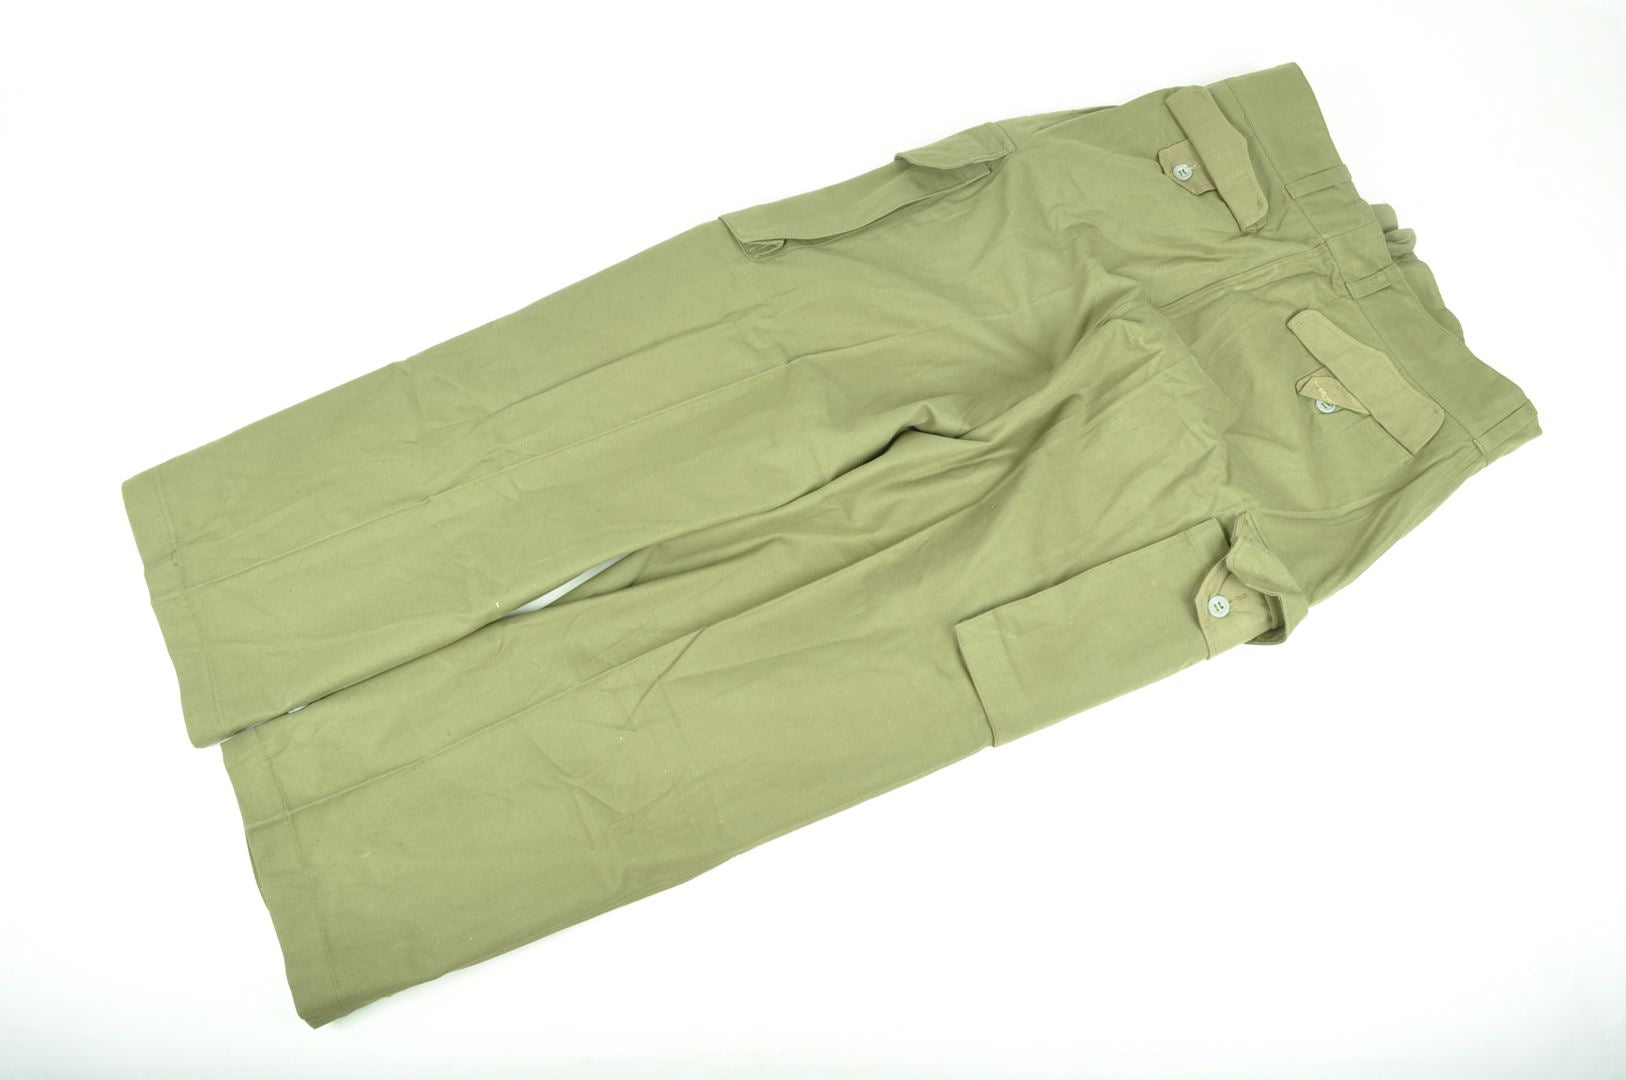 Pantalon TTA 47-53 fabrication Allemande / daté 54